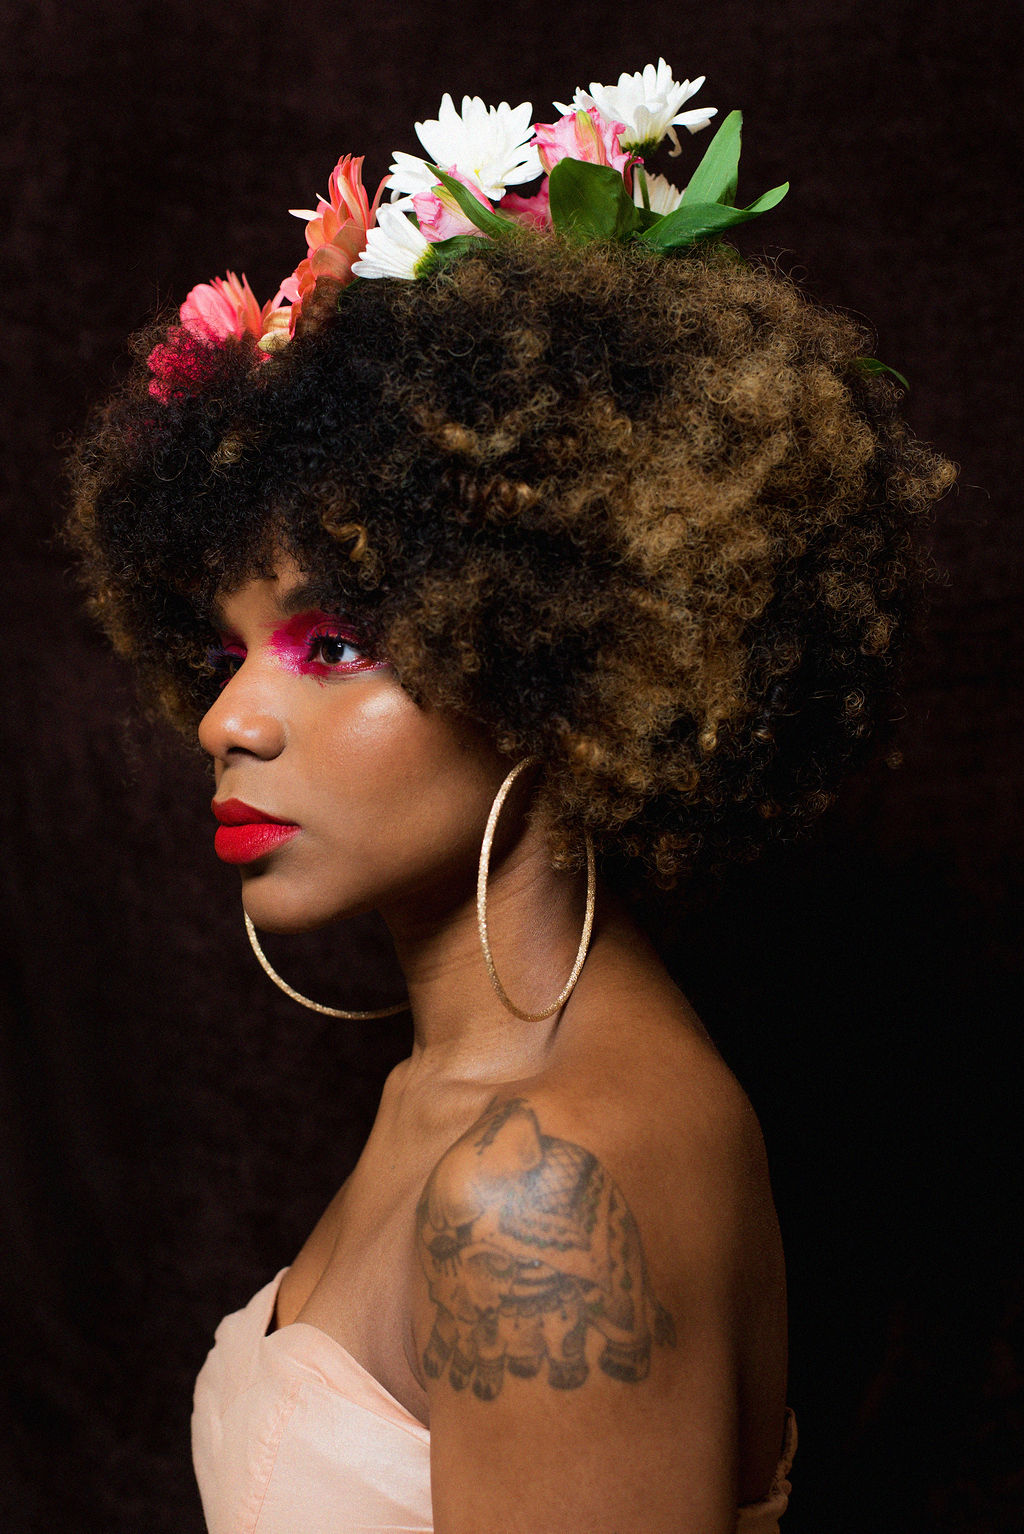 Osato Erebor’s Stunning New Photo Series Is an Empowering Celebration of Black Beauty for #BlackHistoryMonth